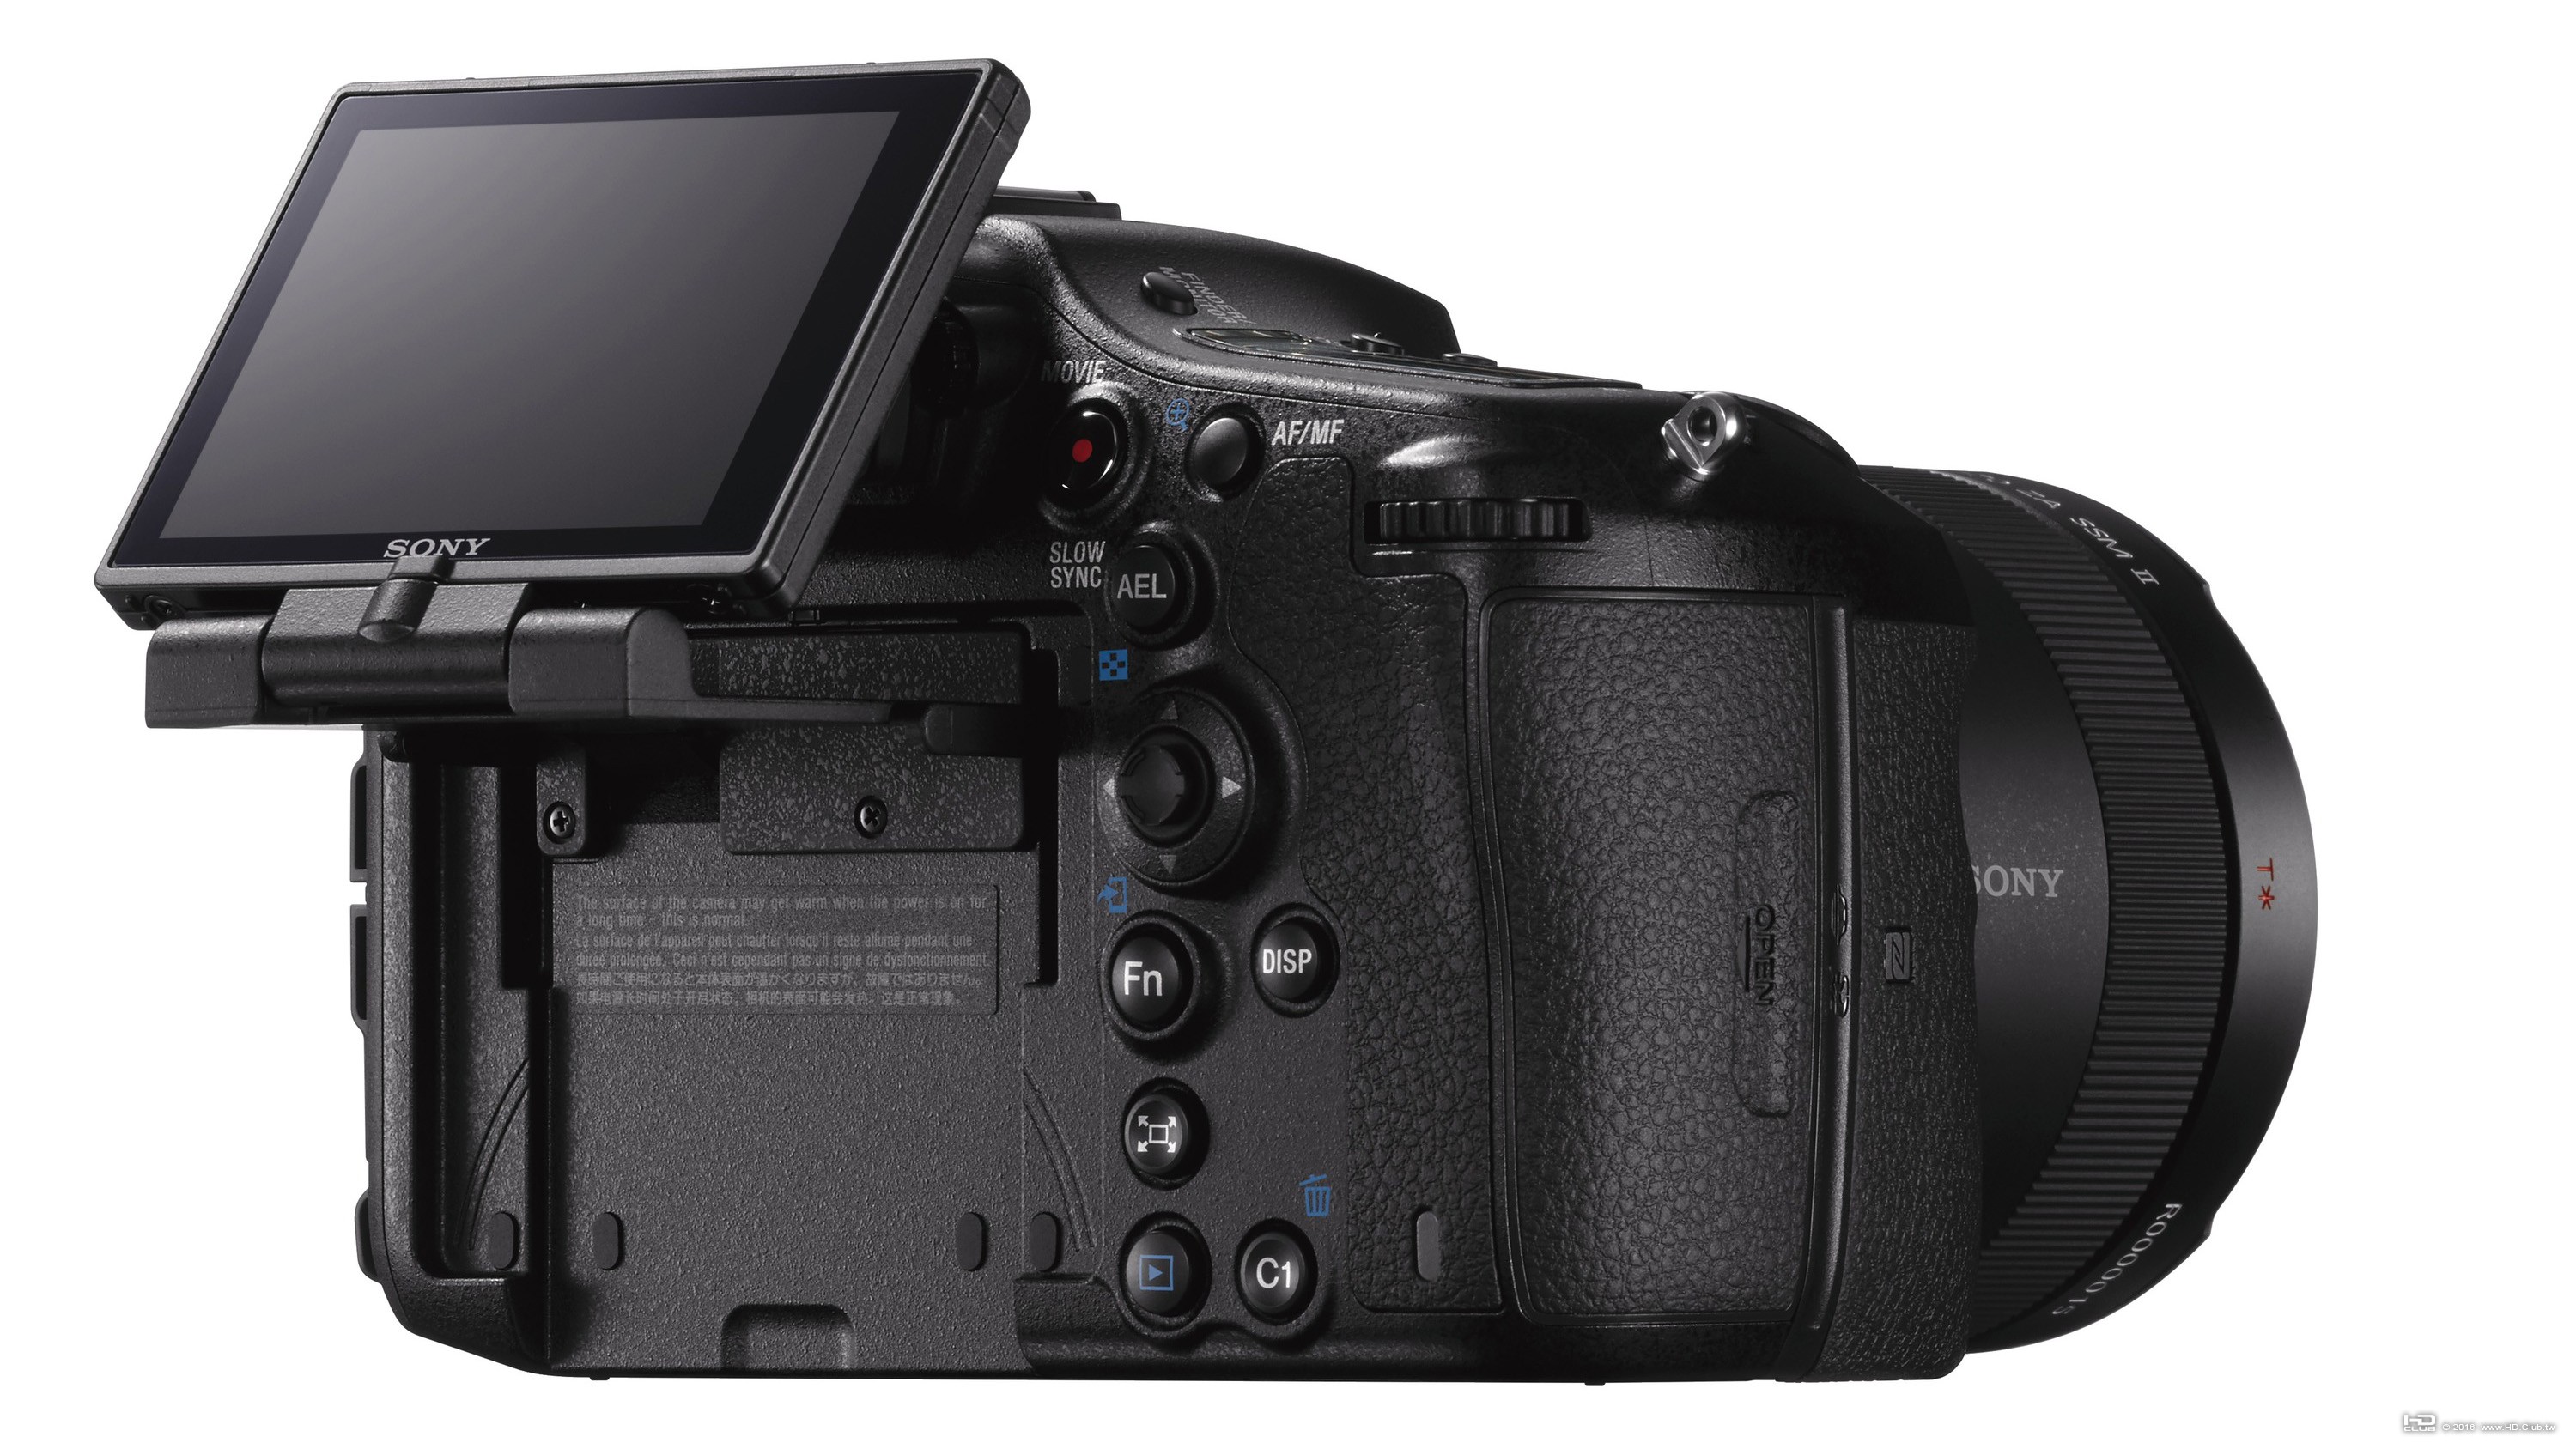 Sony α99 II 機身體積較前代機種 小8%，且具備防塵防滴設計，提供專業攝影師更佳的操.jpg